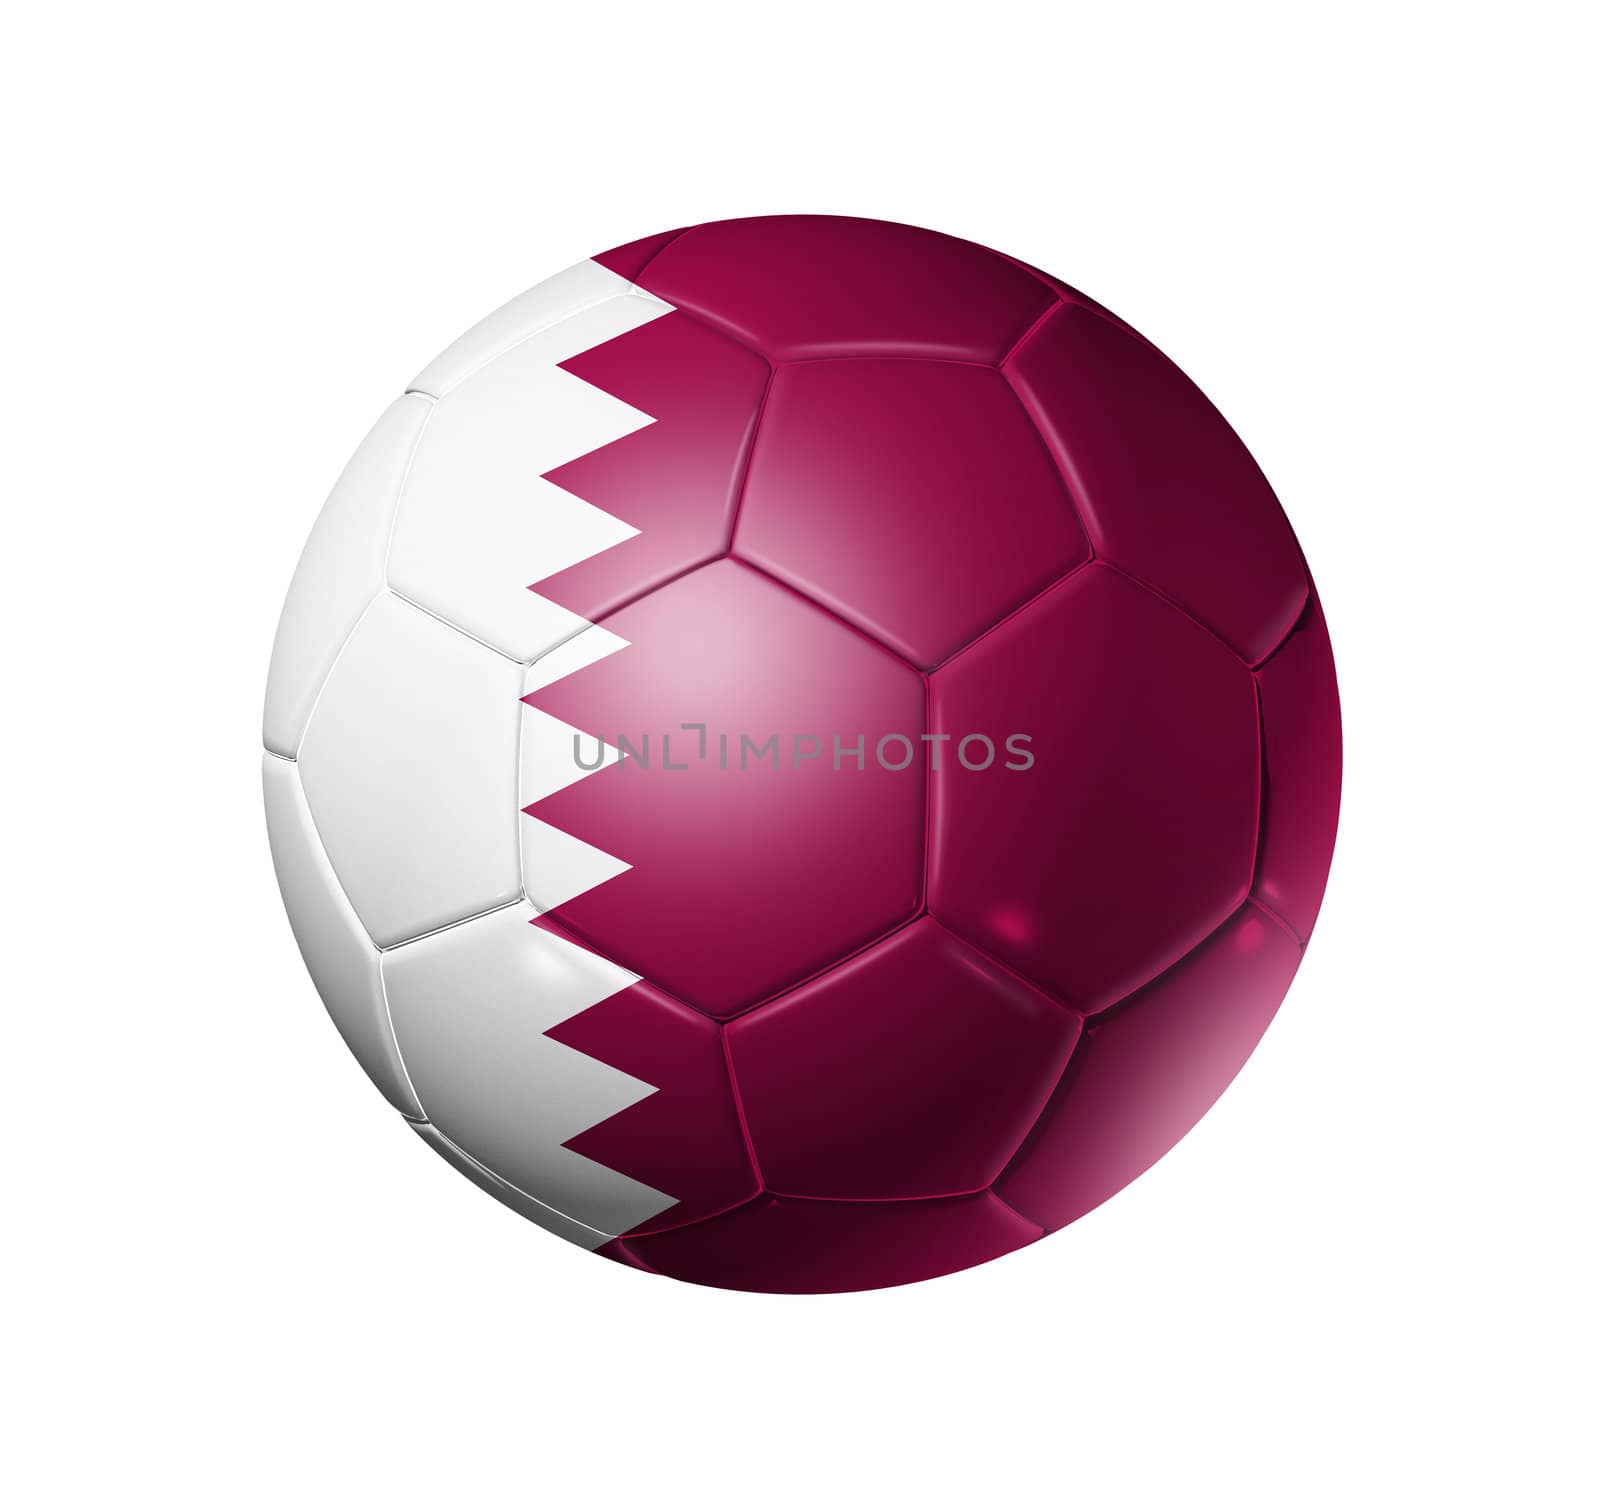 Soccer football ball with Qatar flag by daboost